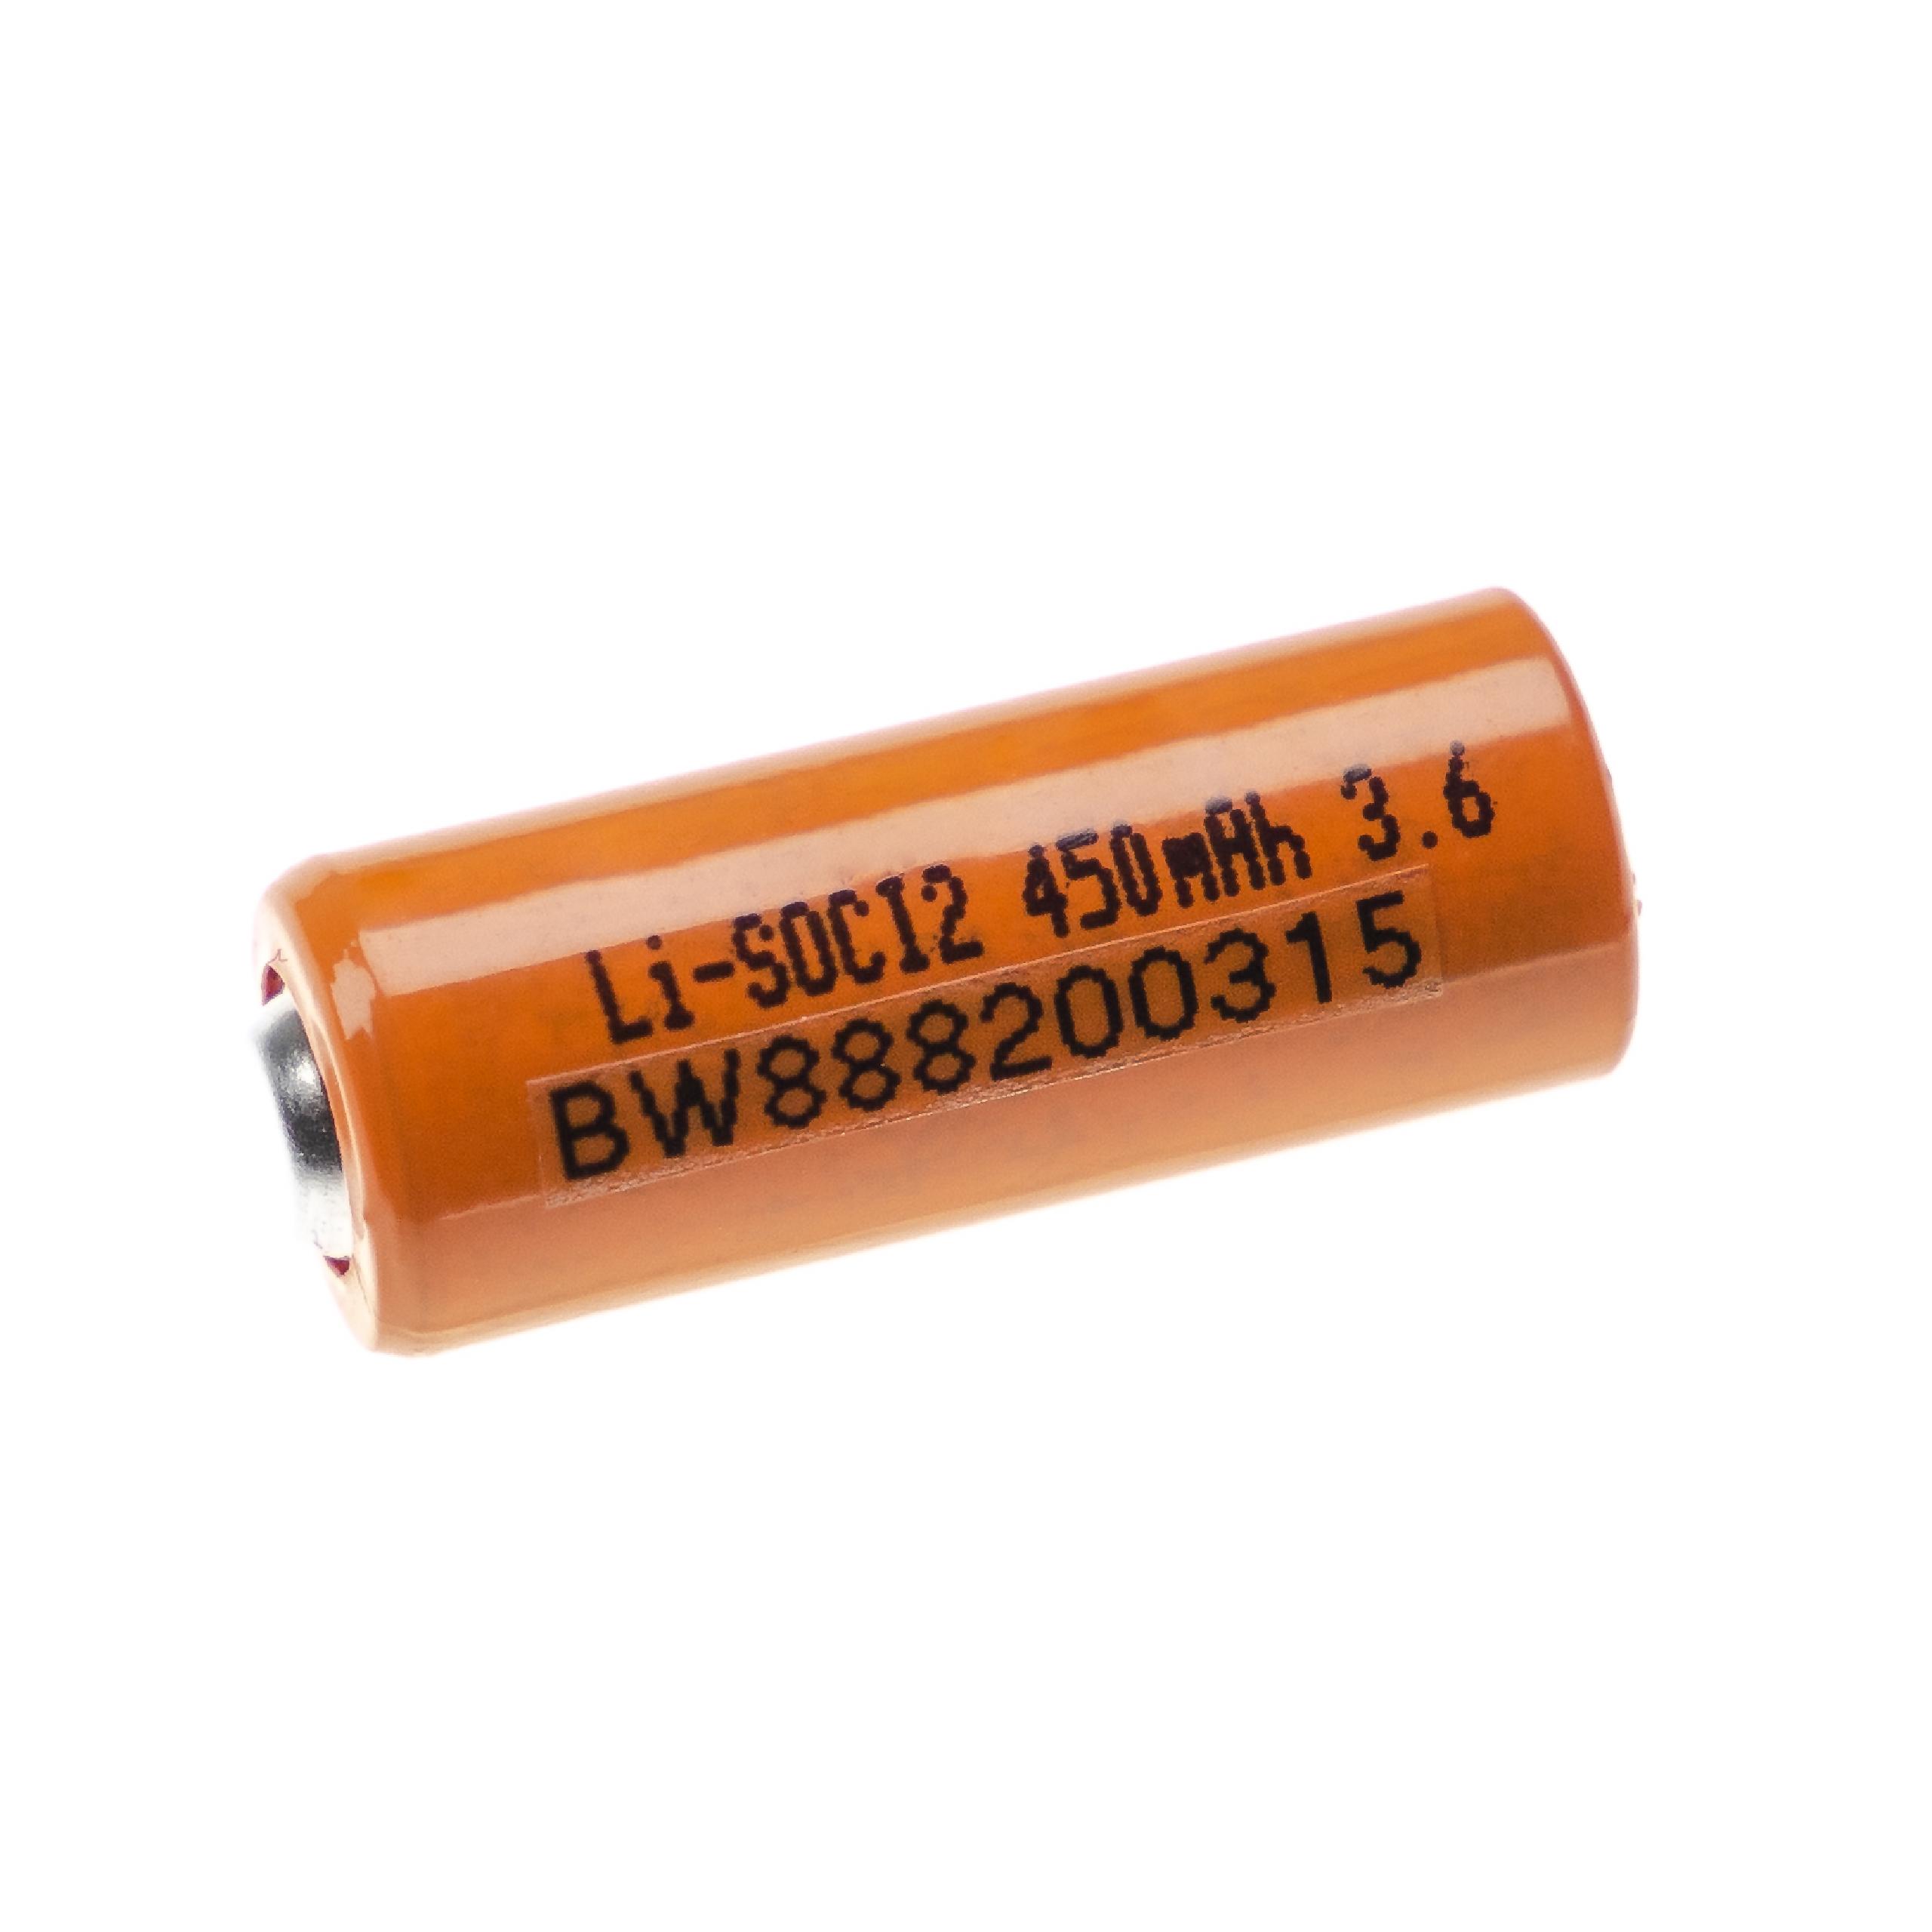 ER10280 Replacement Battery - 450mAh 3.6V Li-SOCl2